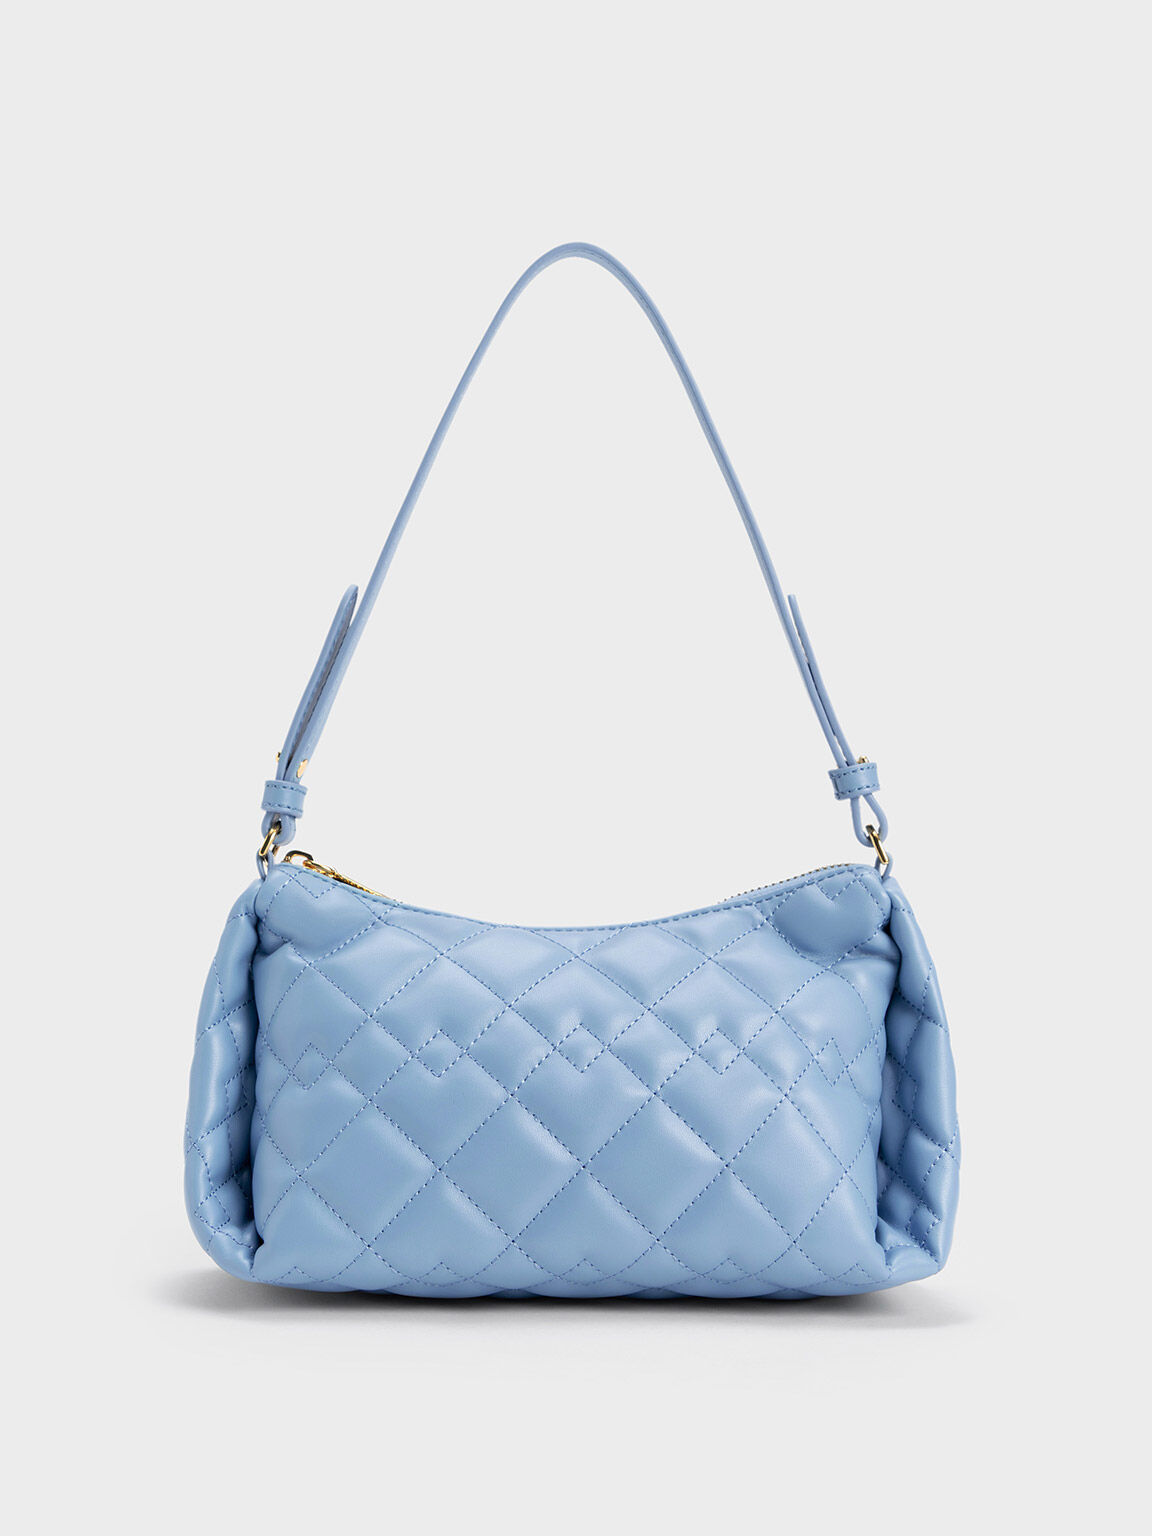 PRADA Textured Nylon Check Tote Shoulder Bag Blue - 15% OFF